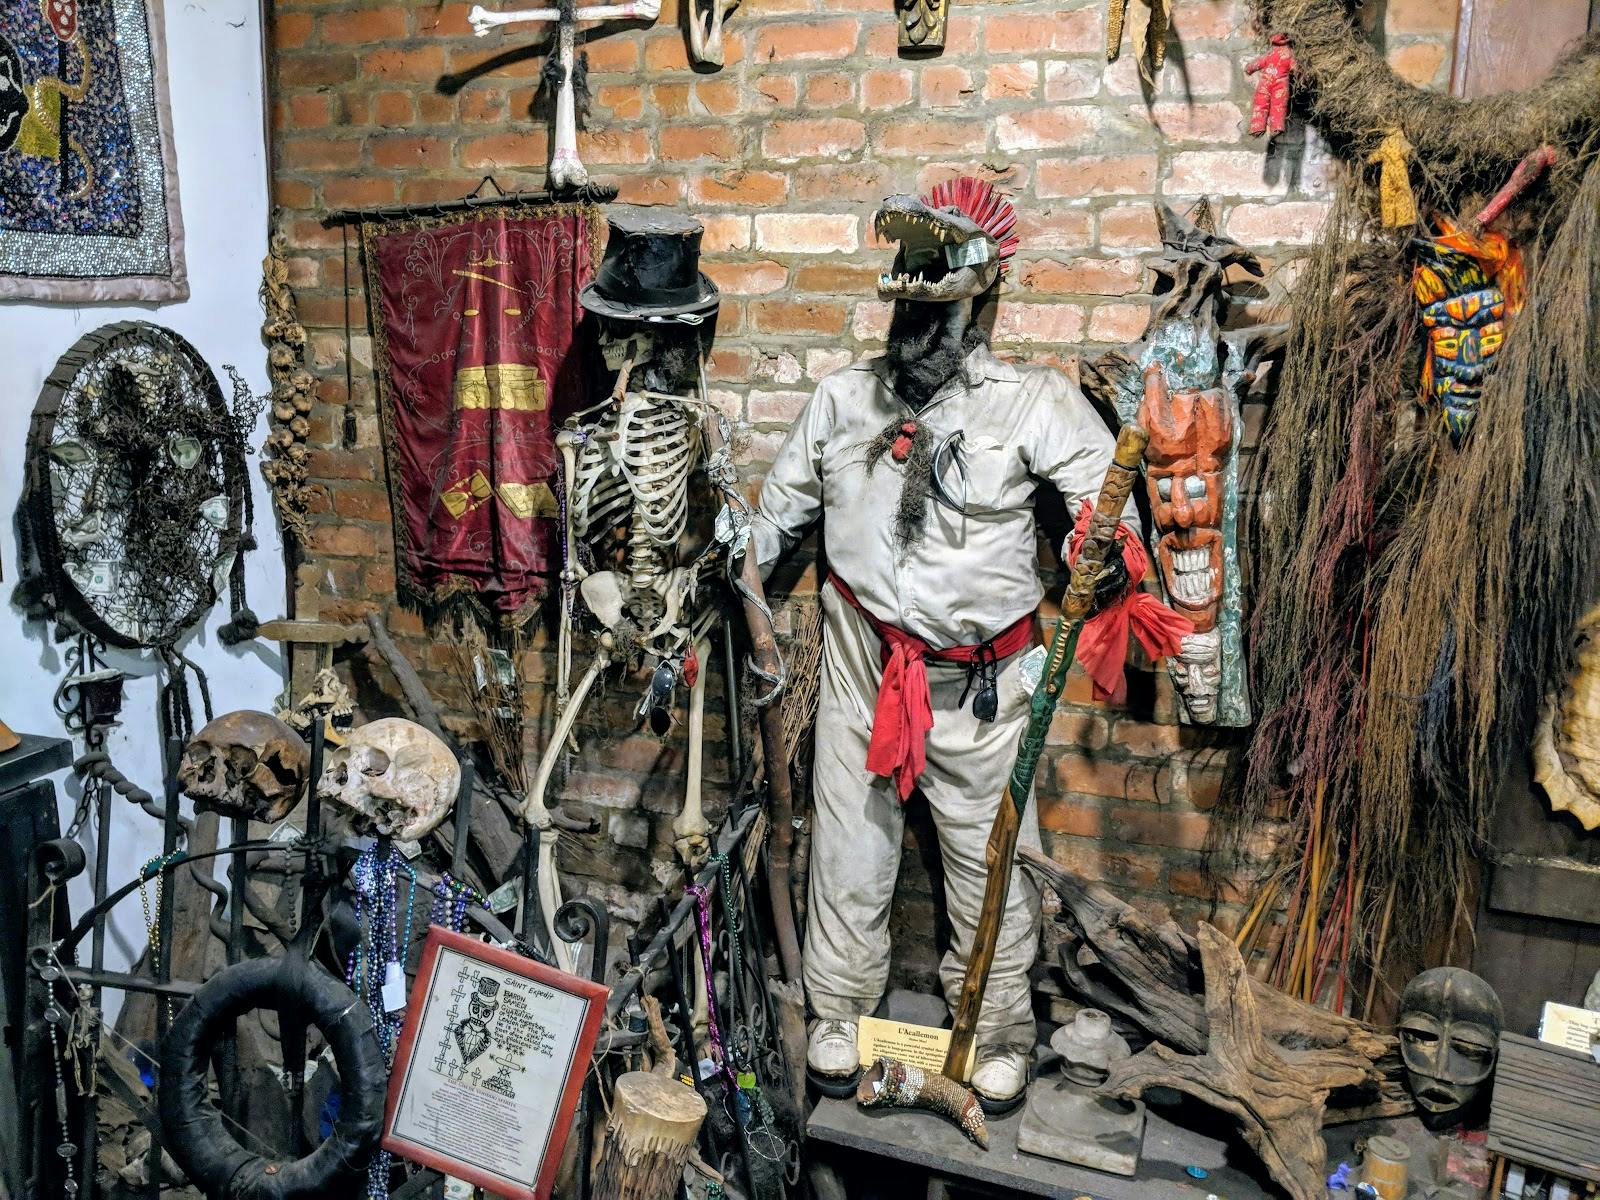 Image - New Orleans Historic Voodoo Museum